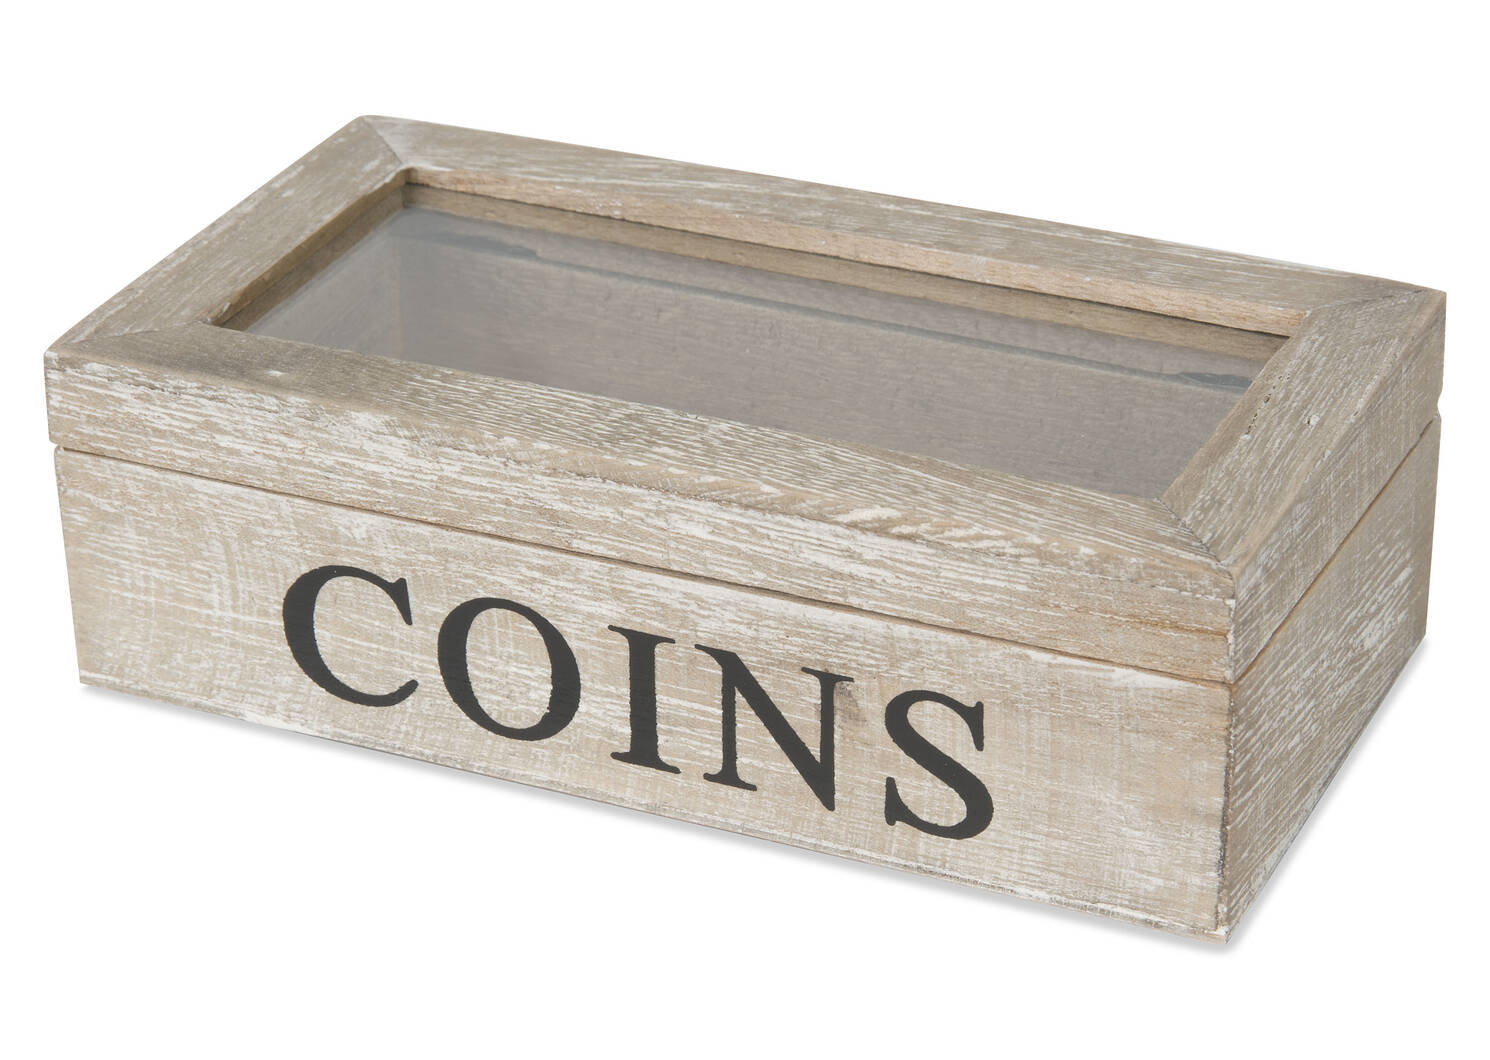 Vintage Coin Box